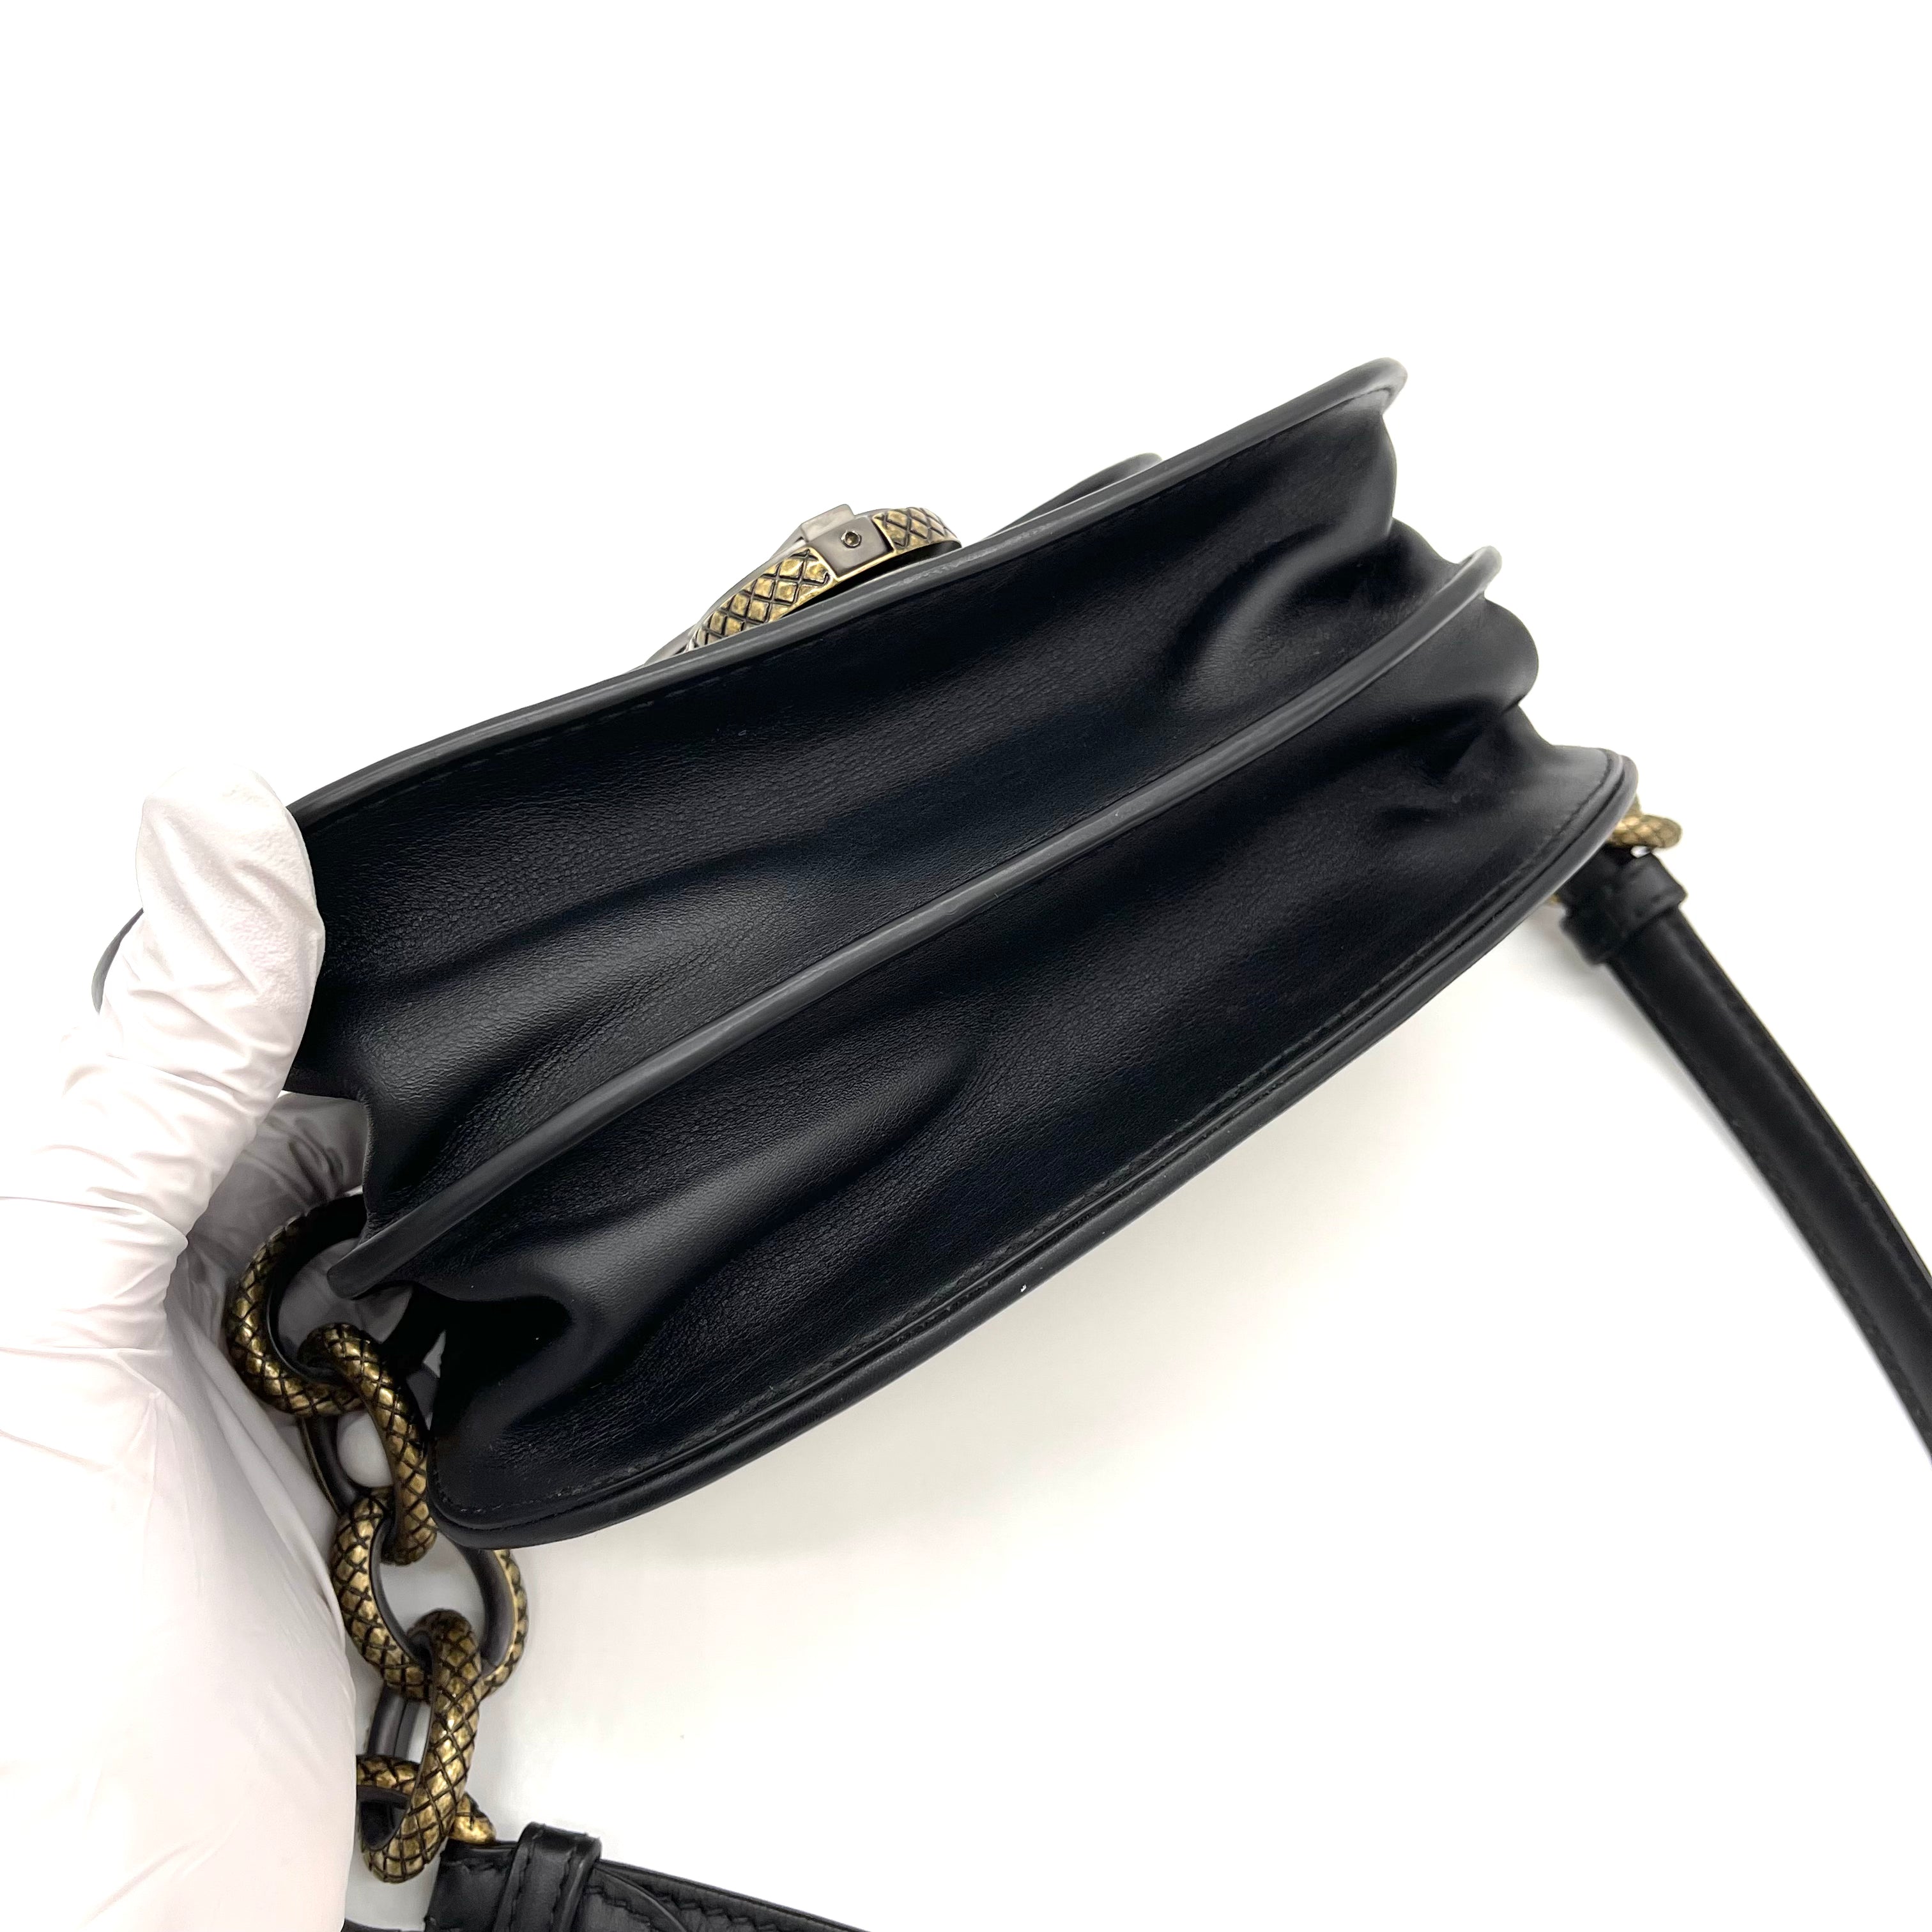 [SALE]BOTTEGA VENETA Calfskin Pony Hair Leopard Print Umbria Bag Black